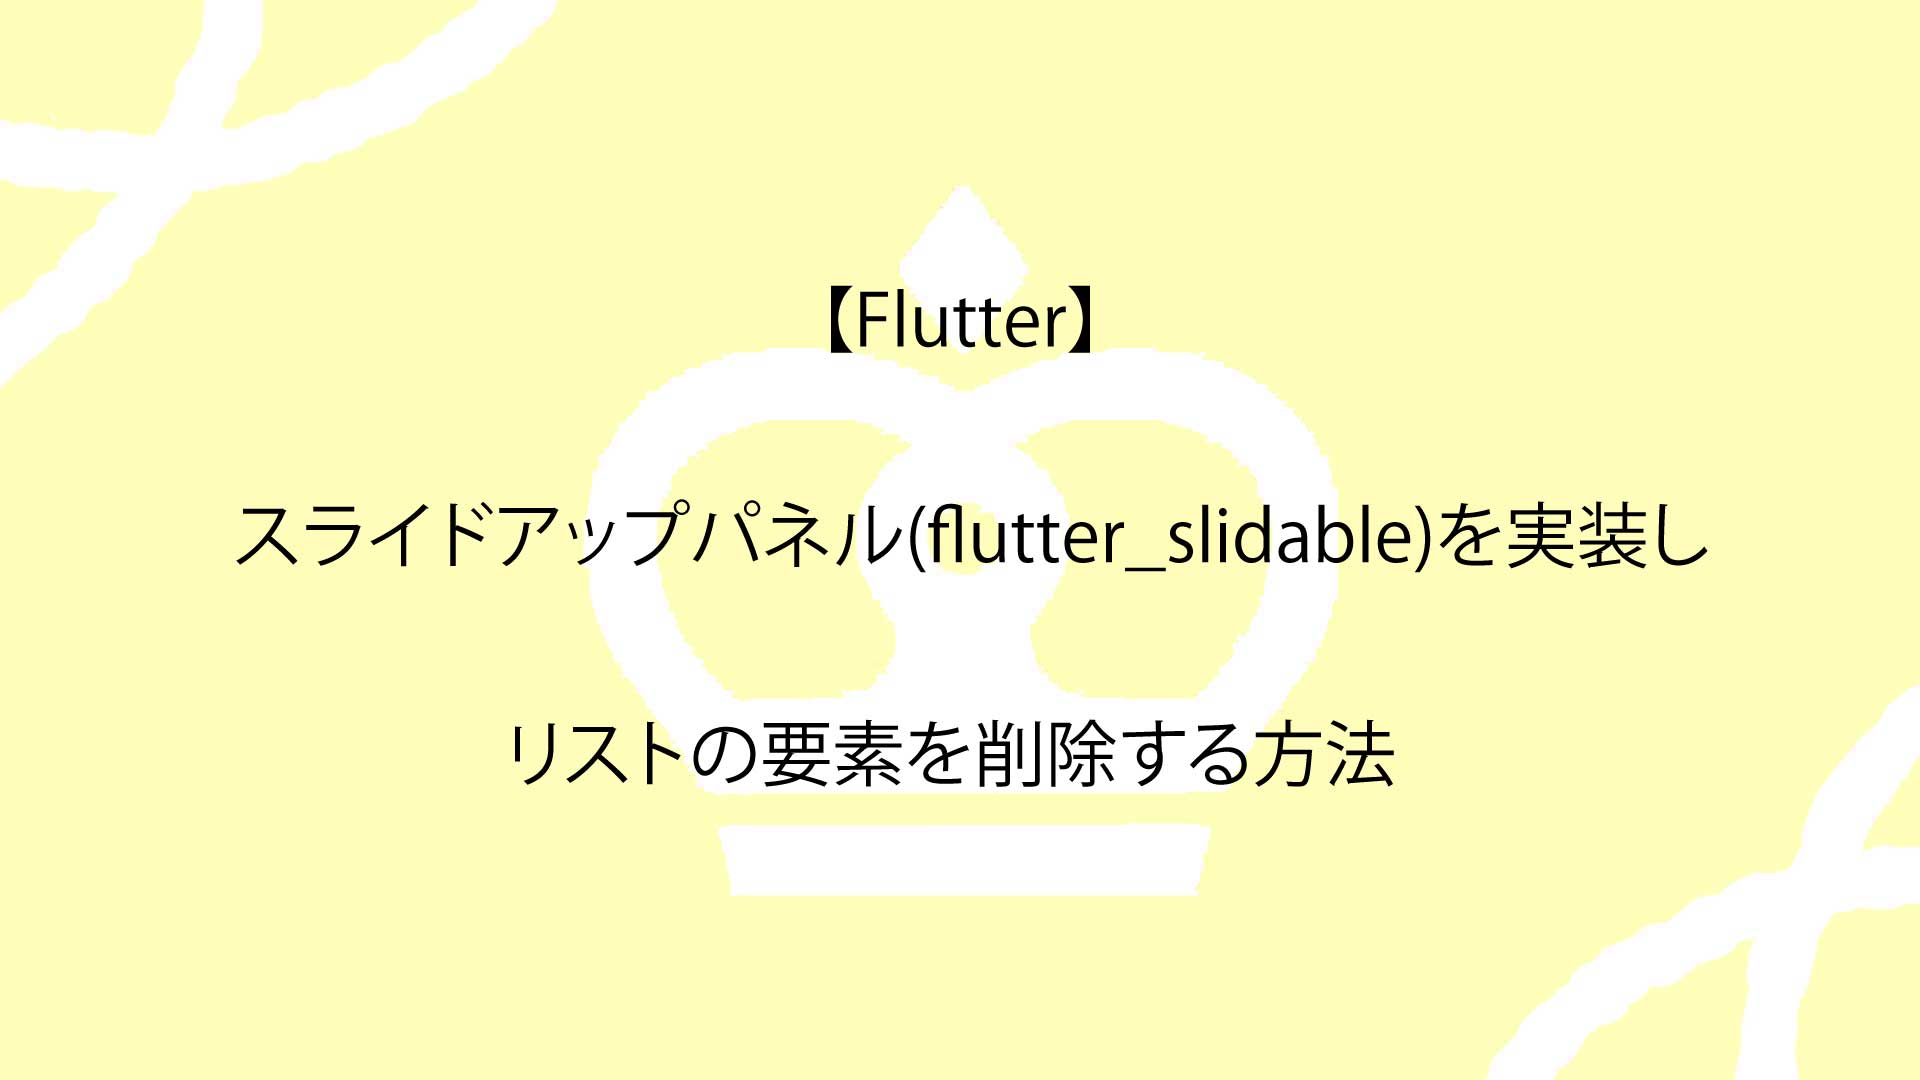 【Flutter】スライドアップパネル(flutter_slidable)を実装し、リストの要素を削除する方法について解説